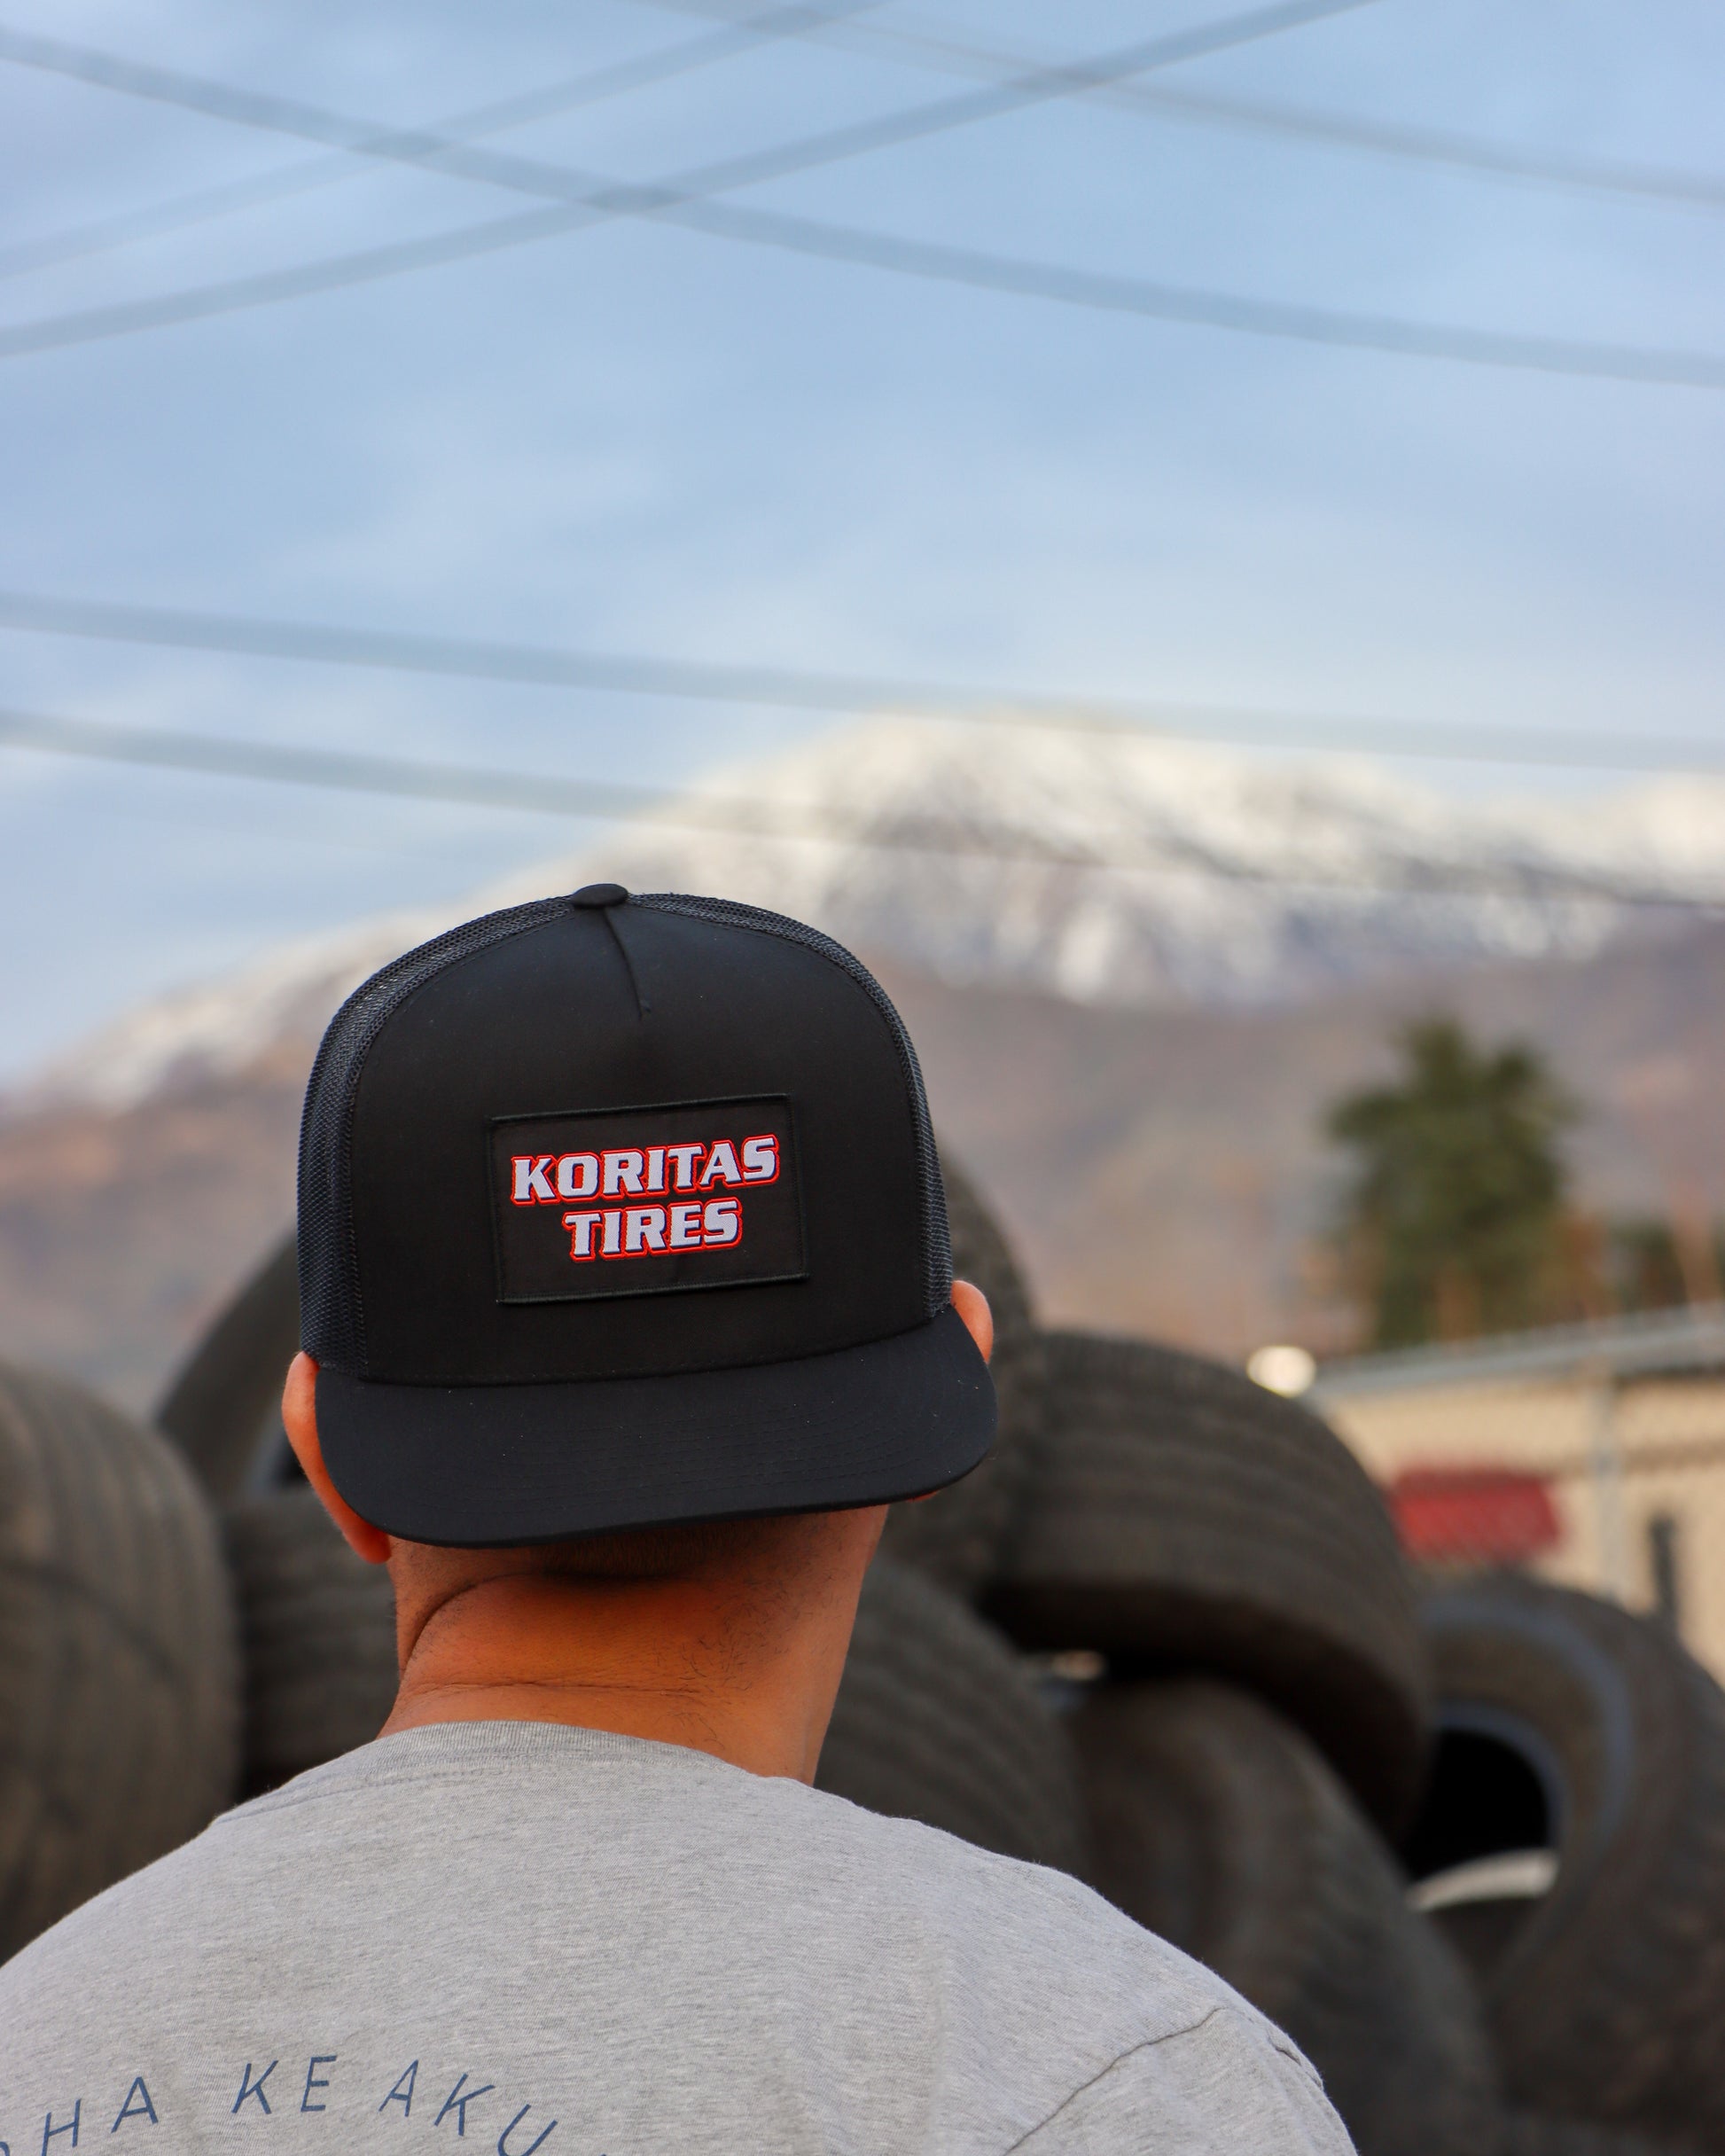 Koritas Tires Trucker Hat on backwards on a model